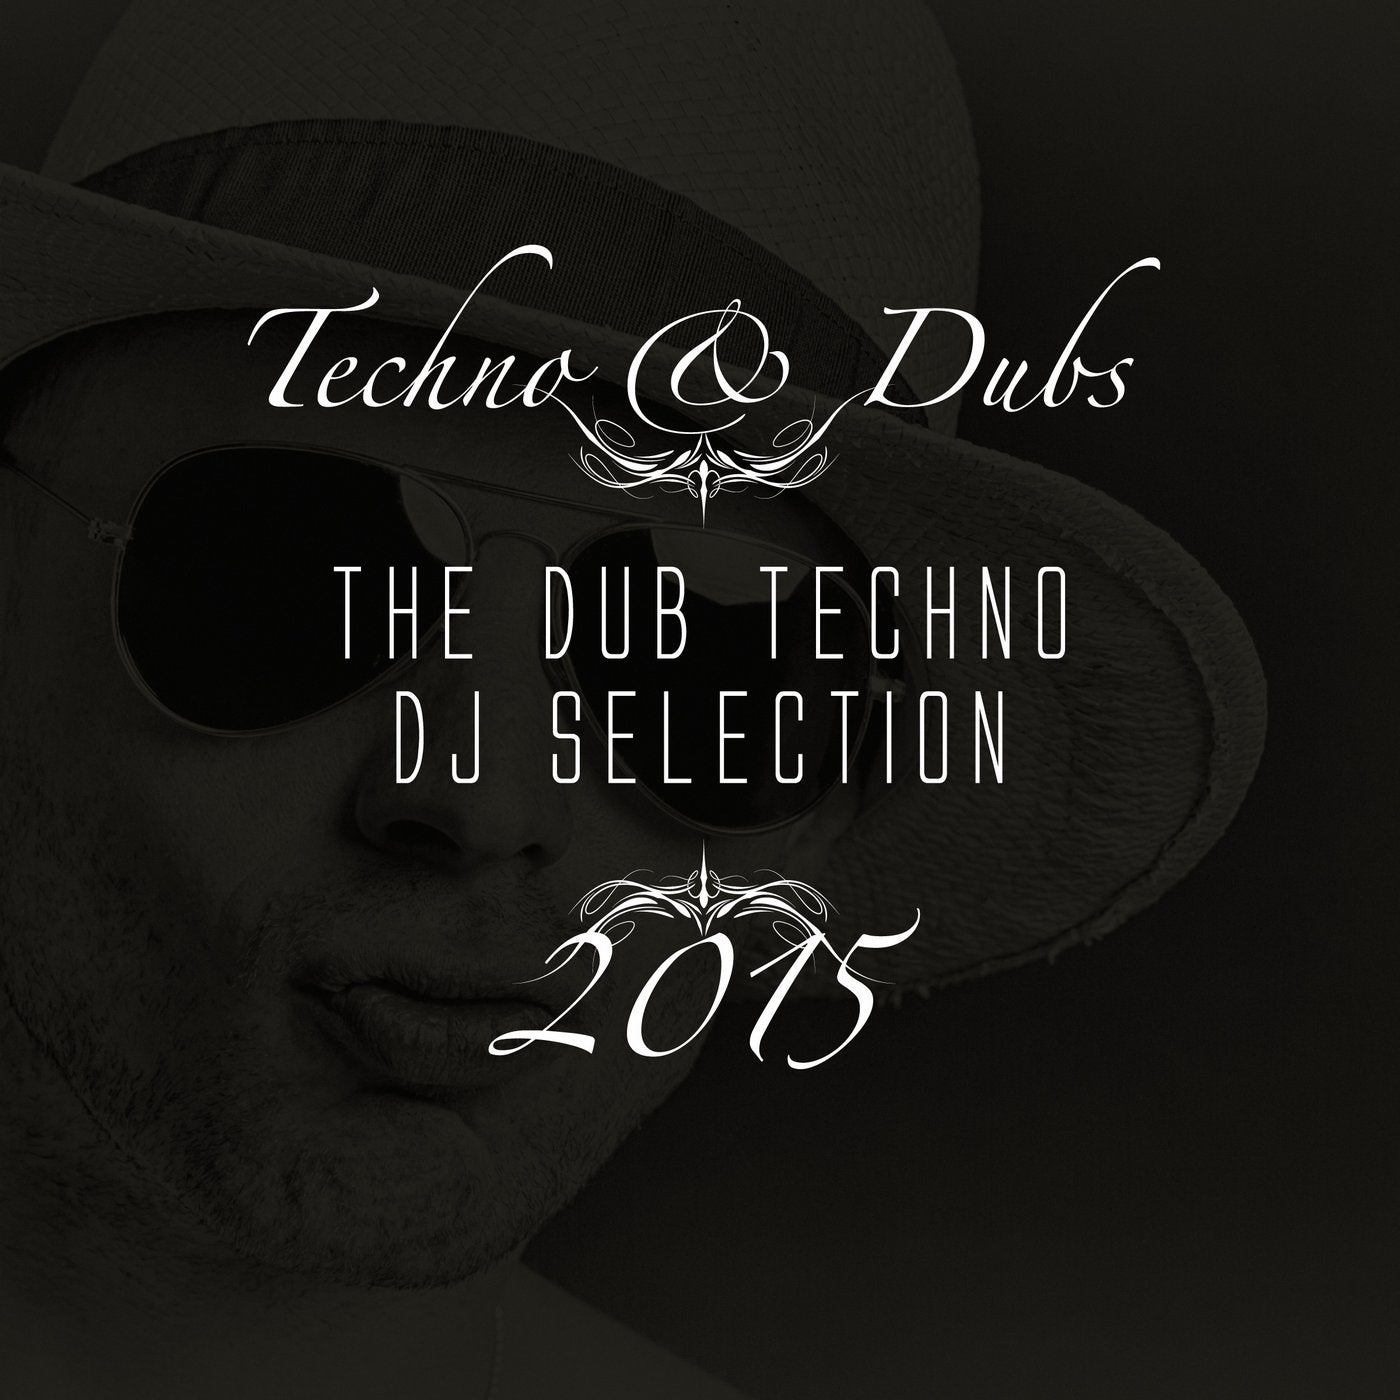 Techno & Dubs - The Dub Techno DJ Selection 2015